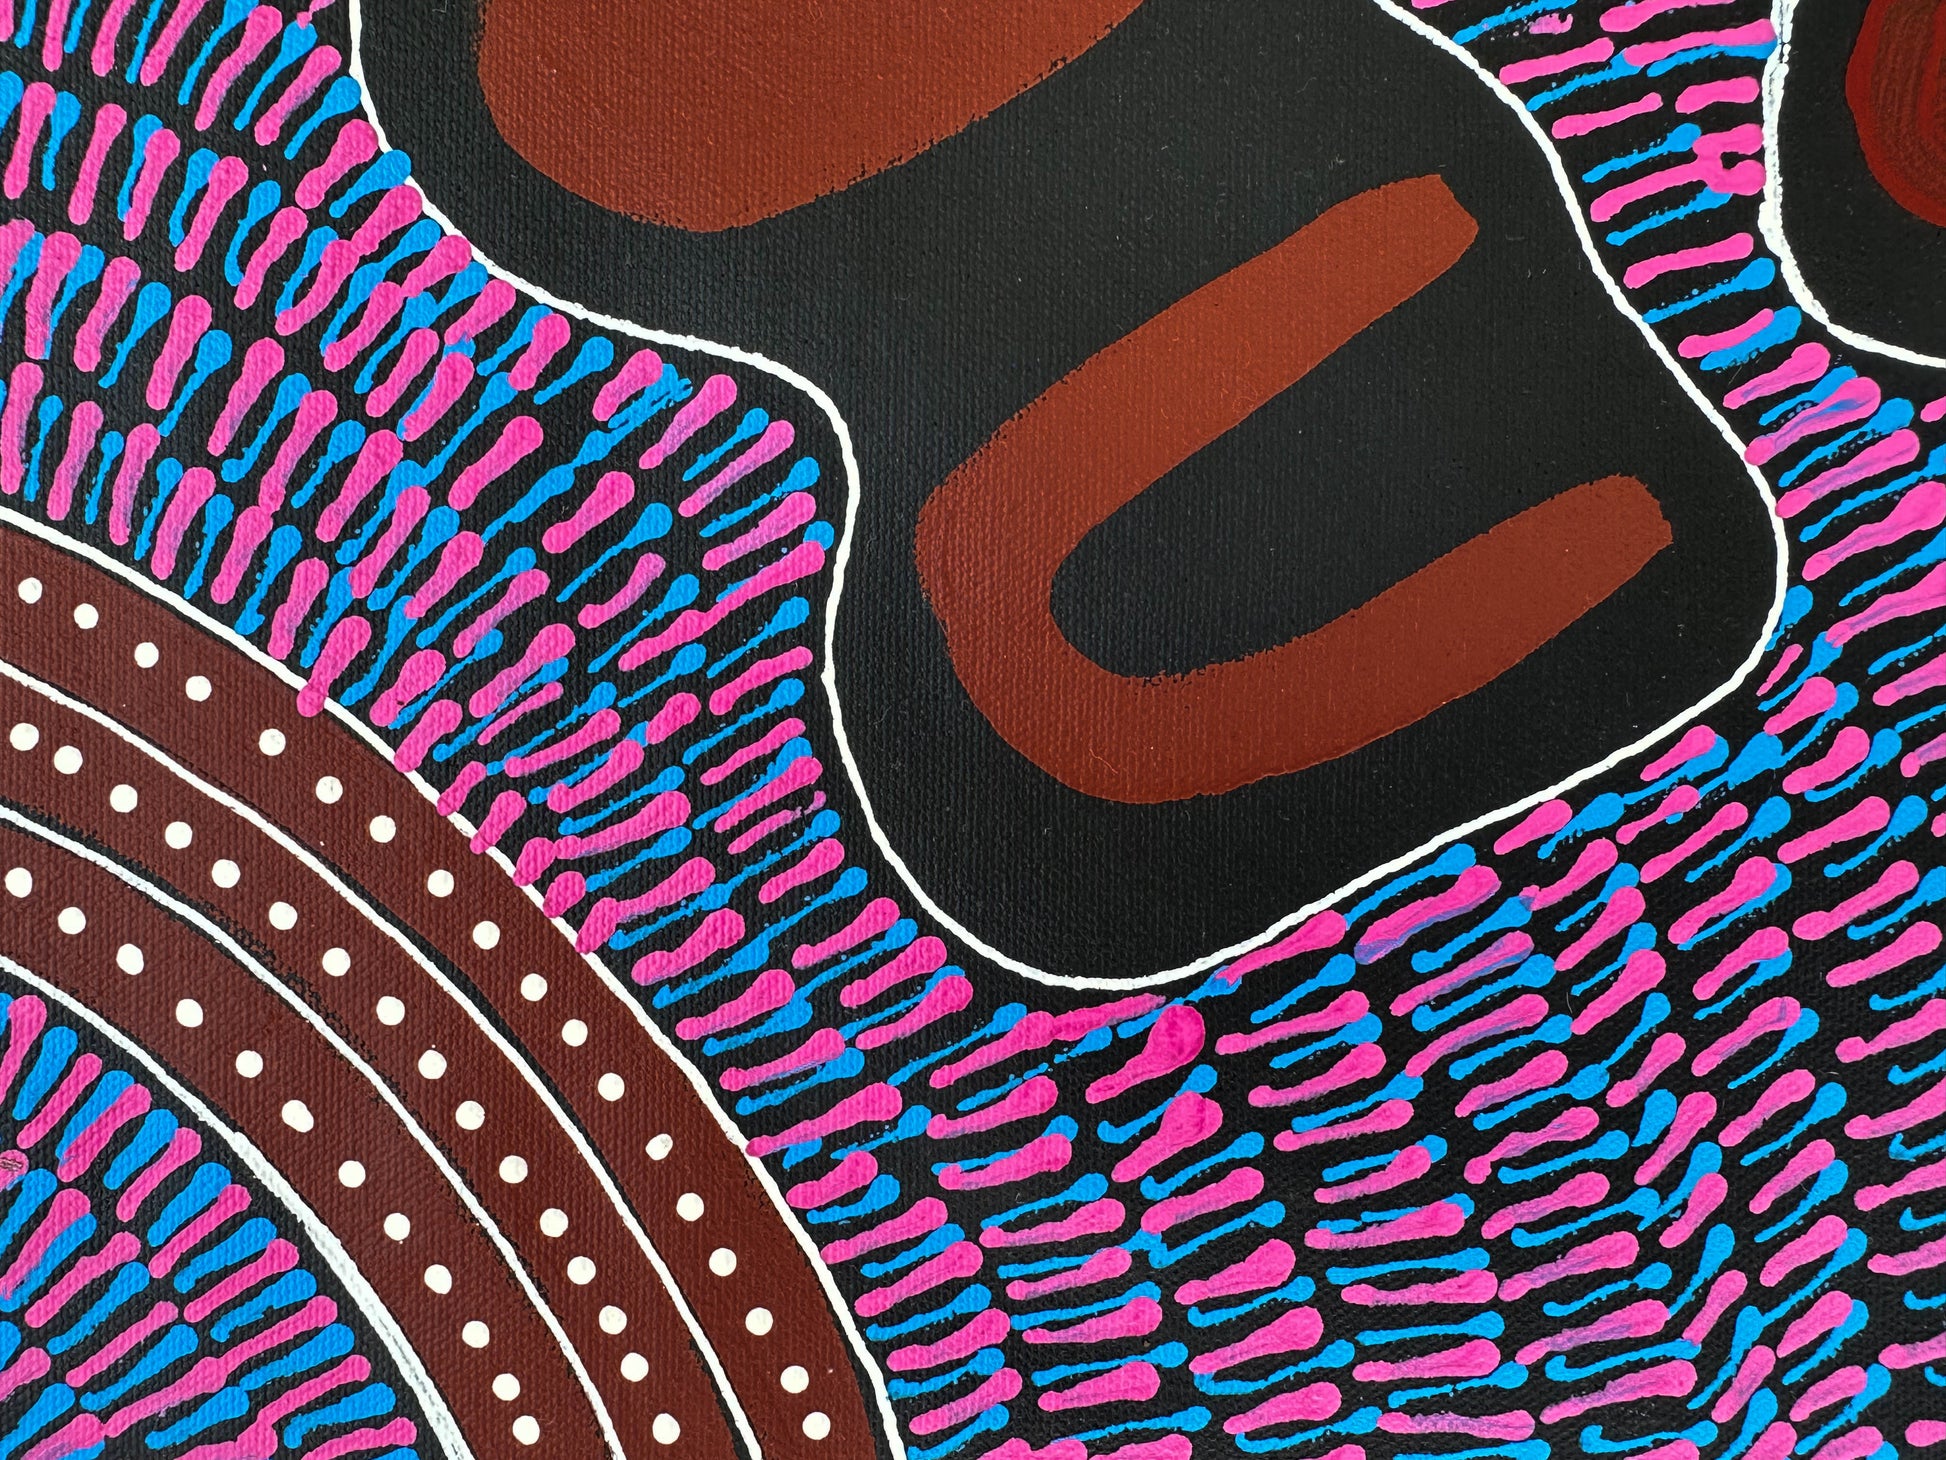 Jessie Bird Nangala Ngale + Utopia + Colourful art + Traditional art + Aboriginal art + Indigenous Art + Bush Tucker + Bush Food + Darwin Based Gallery + Iconography + Symbolism + Dreaming + Darwin Based Gallery 